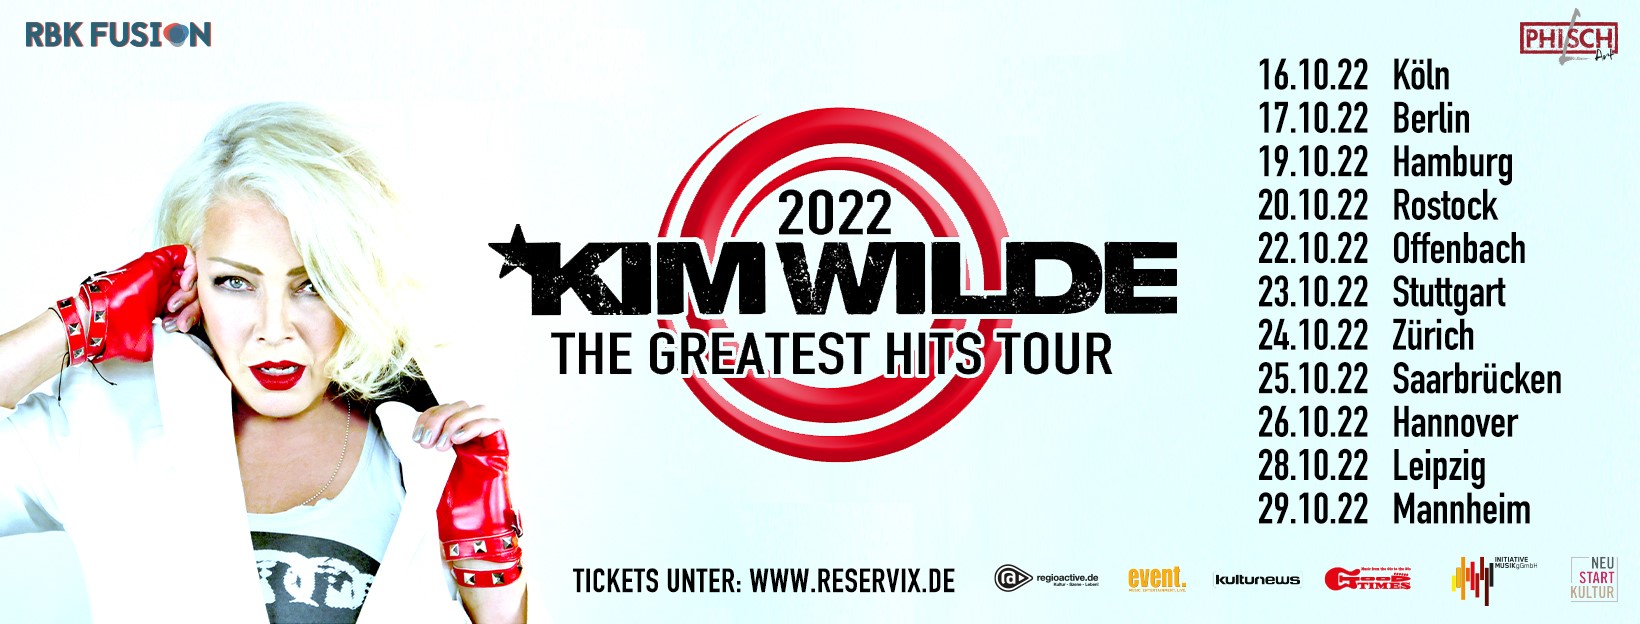 kim-wilde-band-auf-greatest-hits-tour